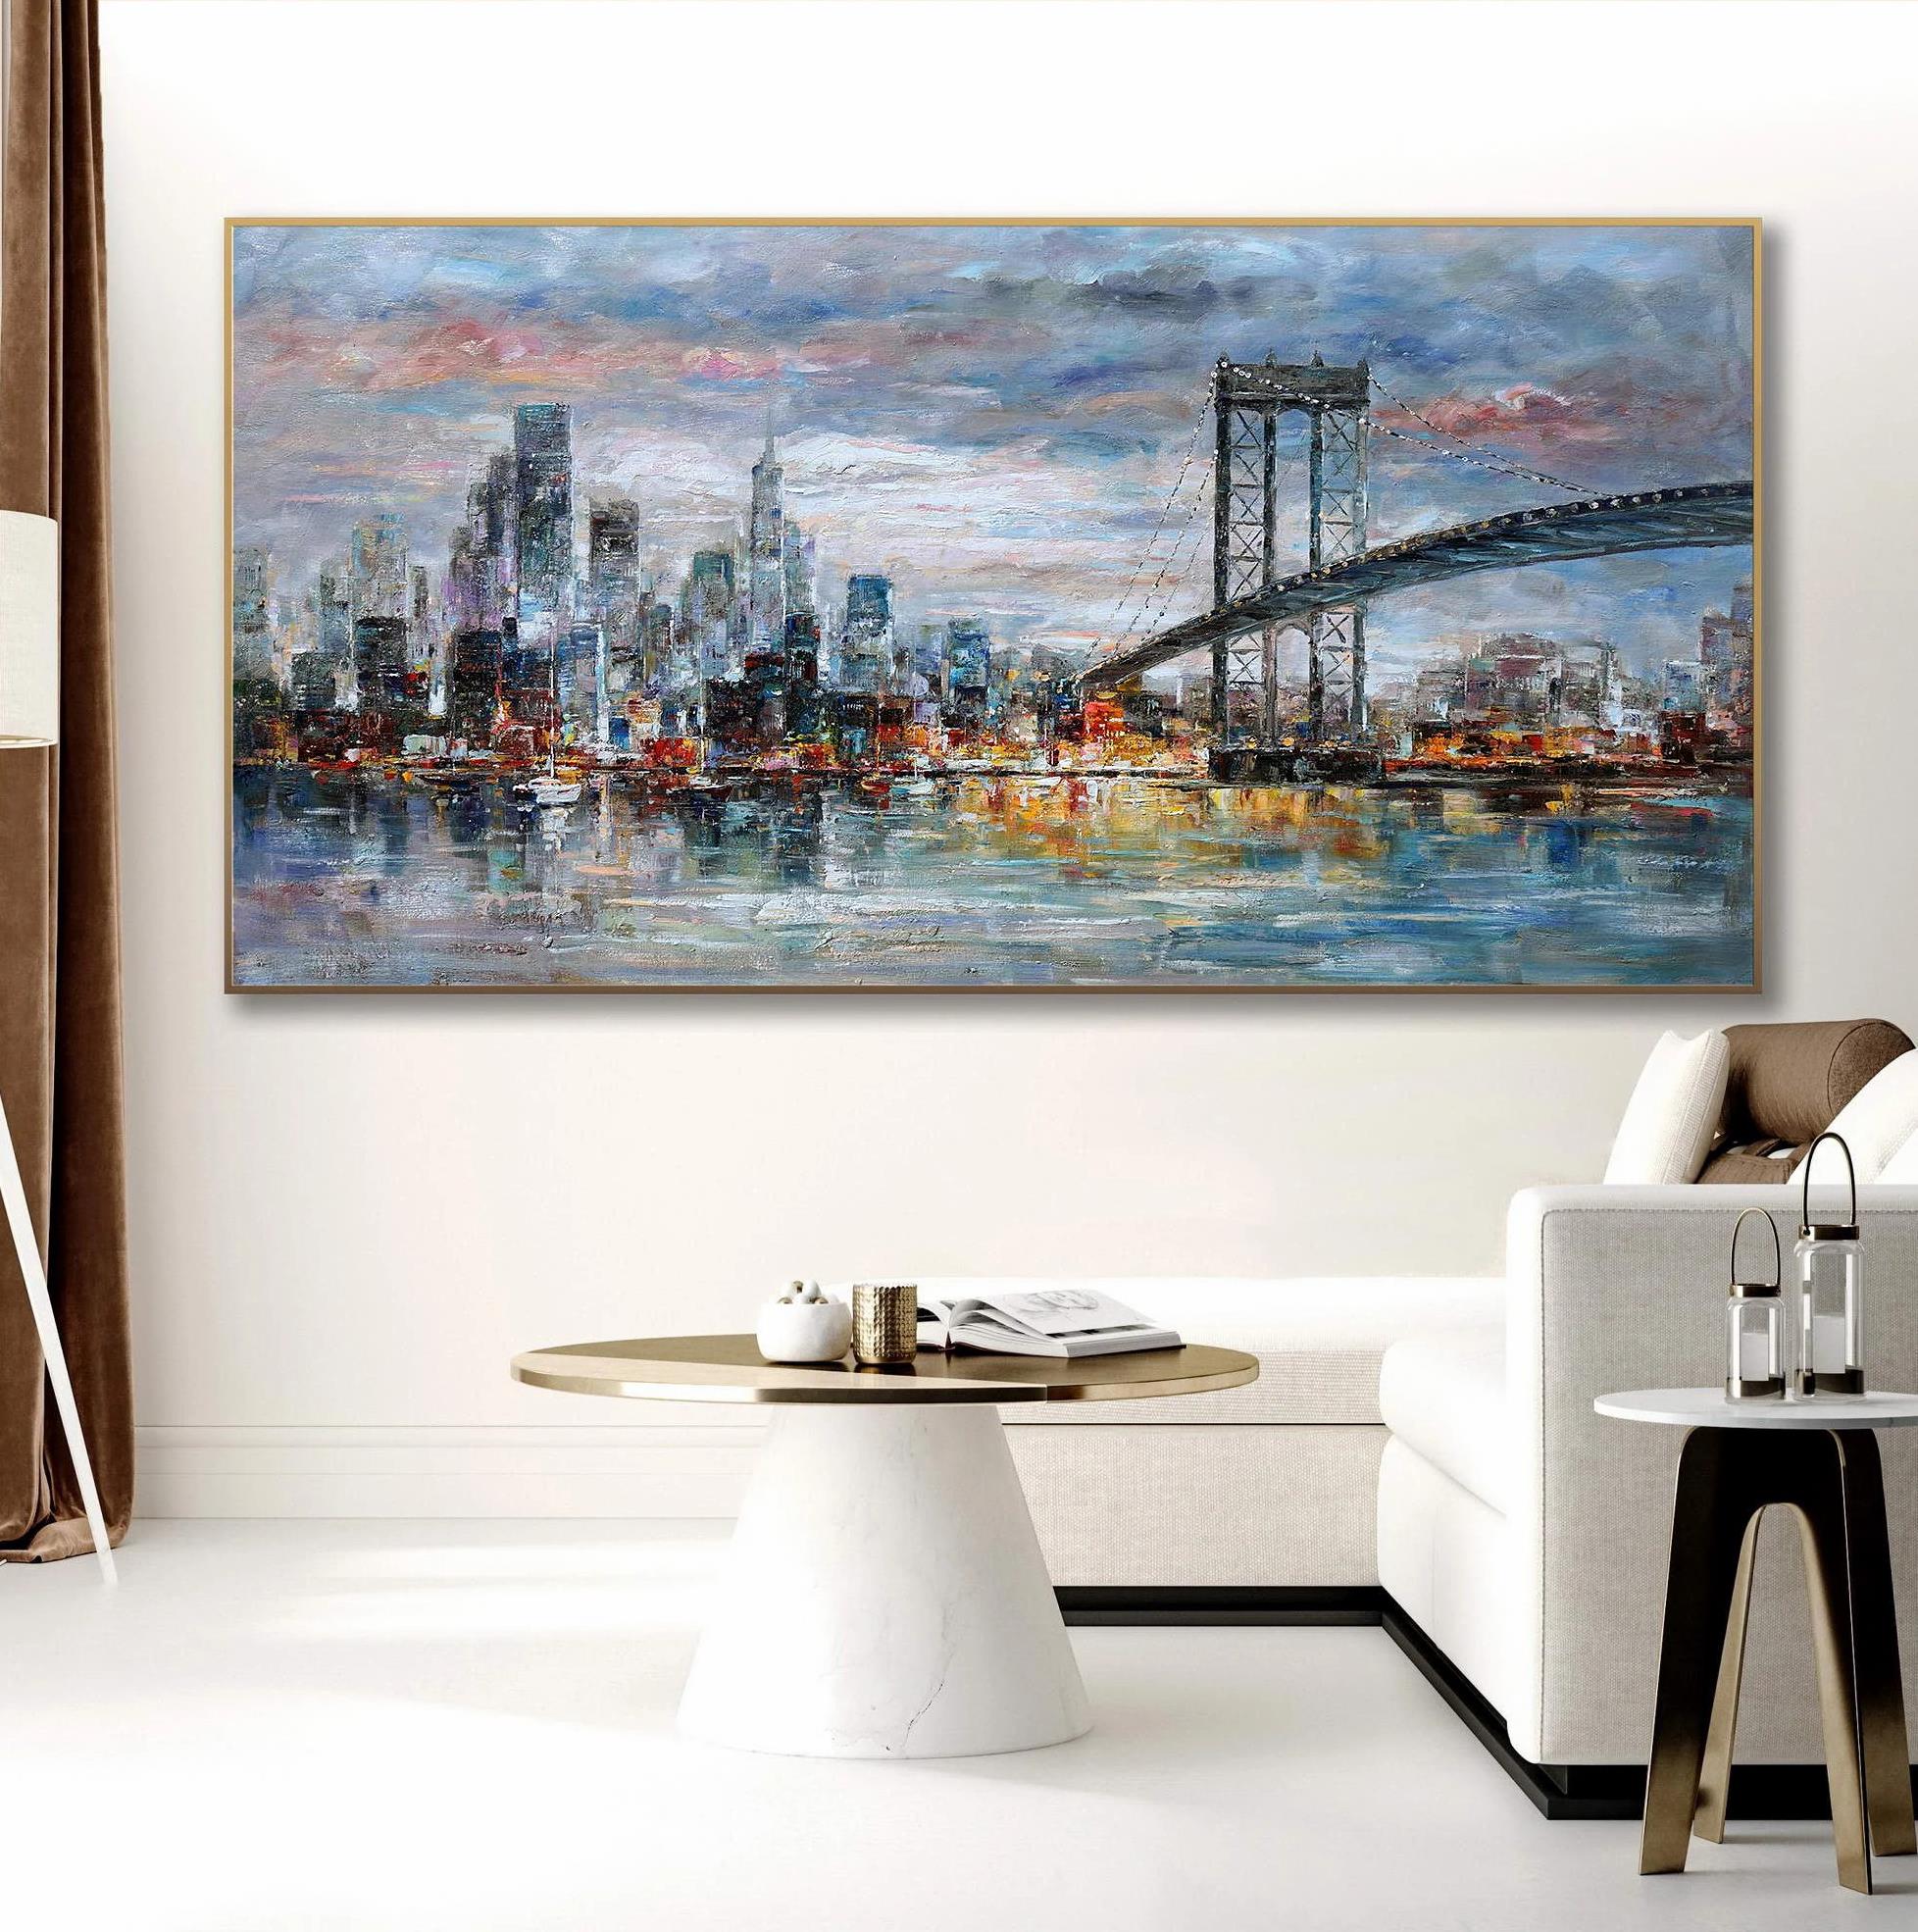 New York Manhattan Brooklyn Bridge NYC Skyline paysage urbain urbain Peintures à l'huile